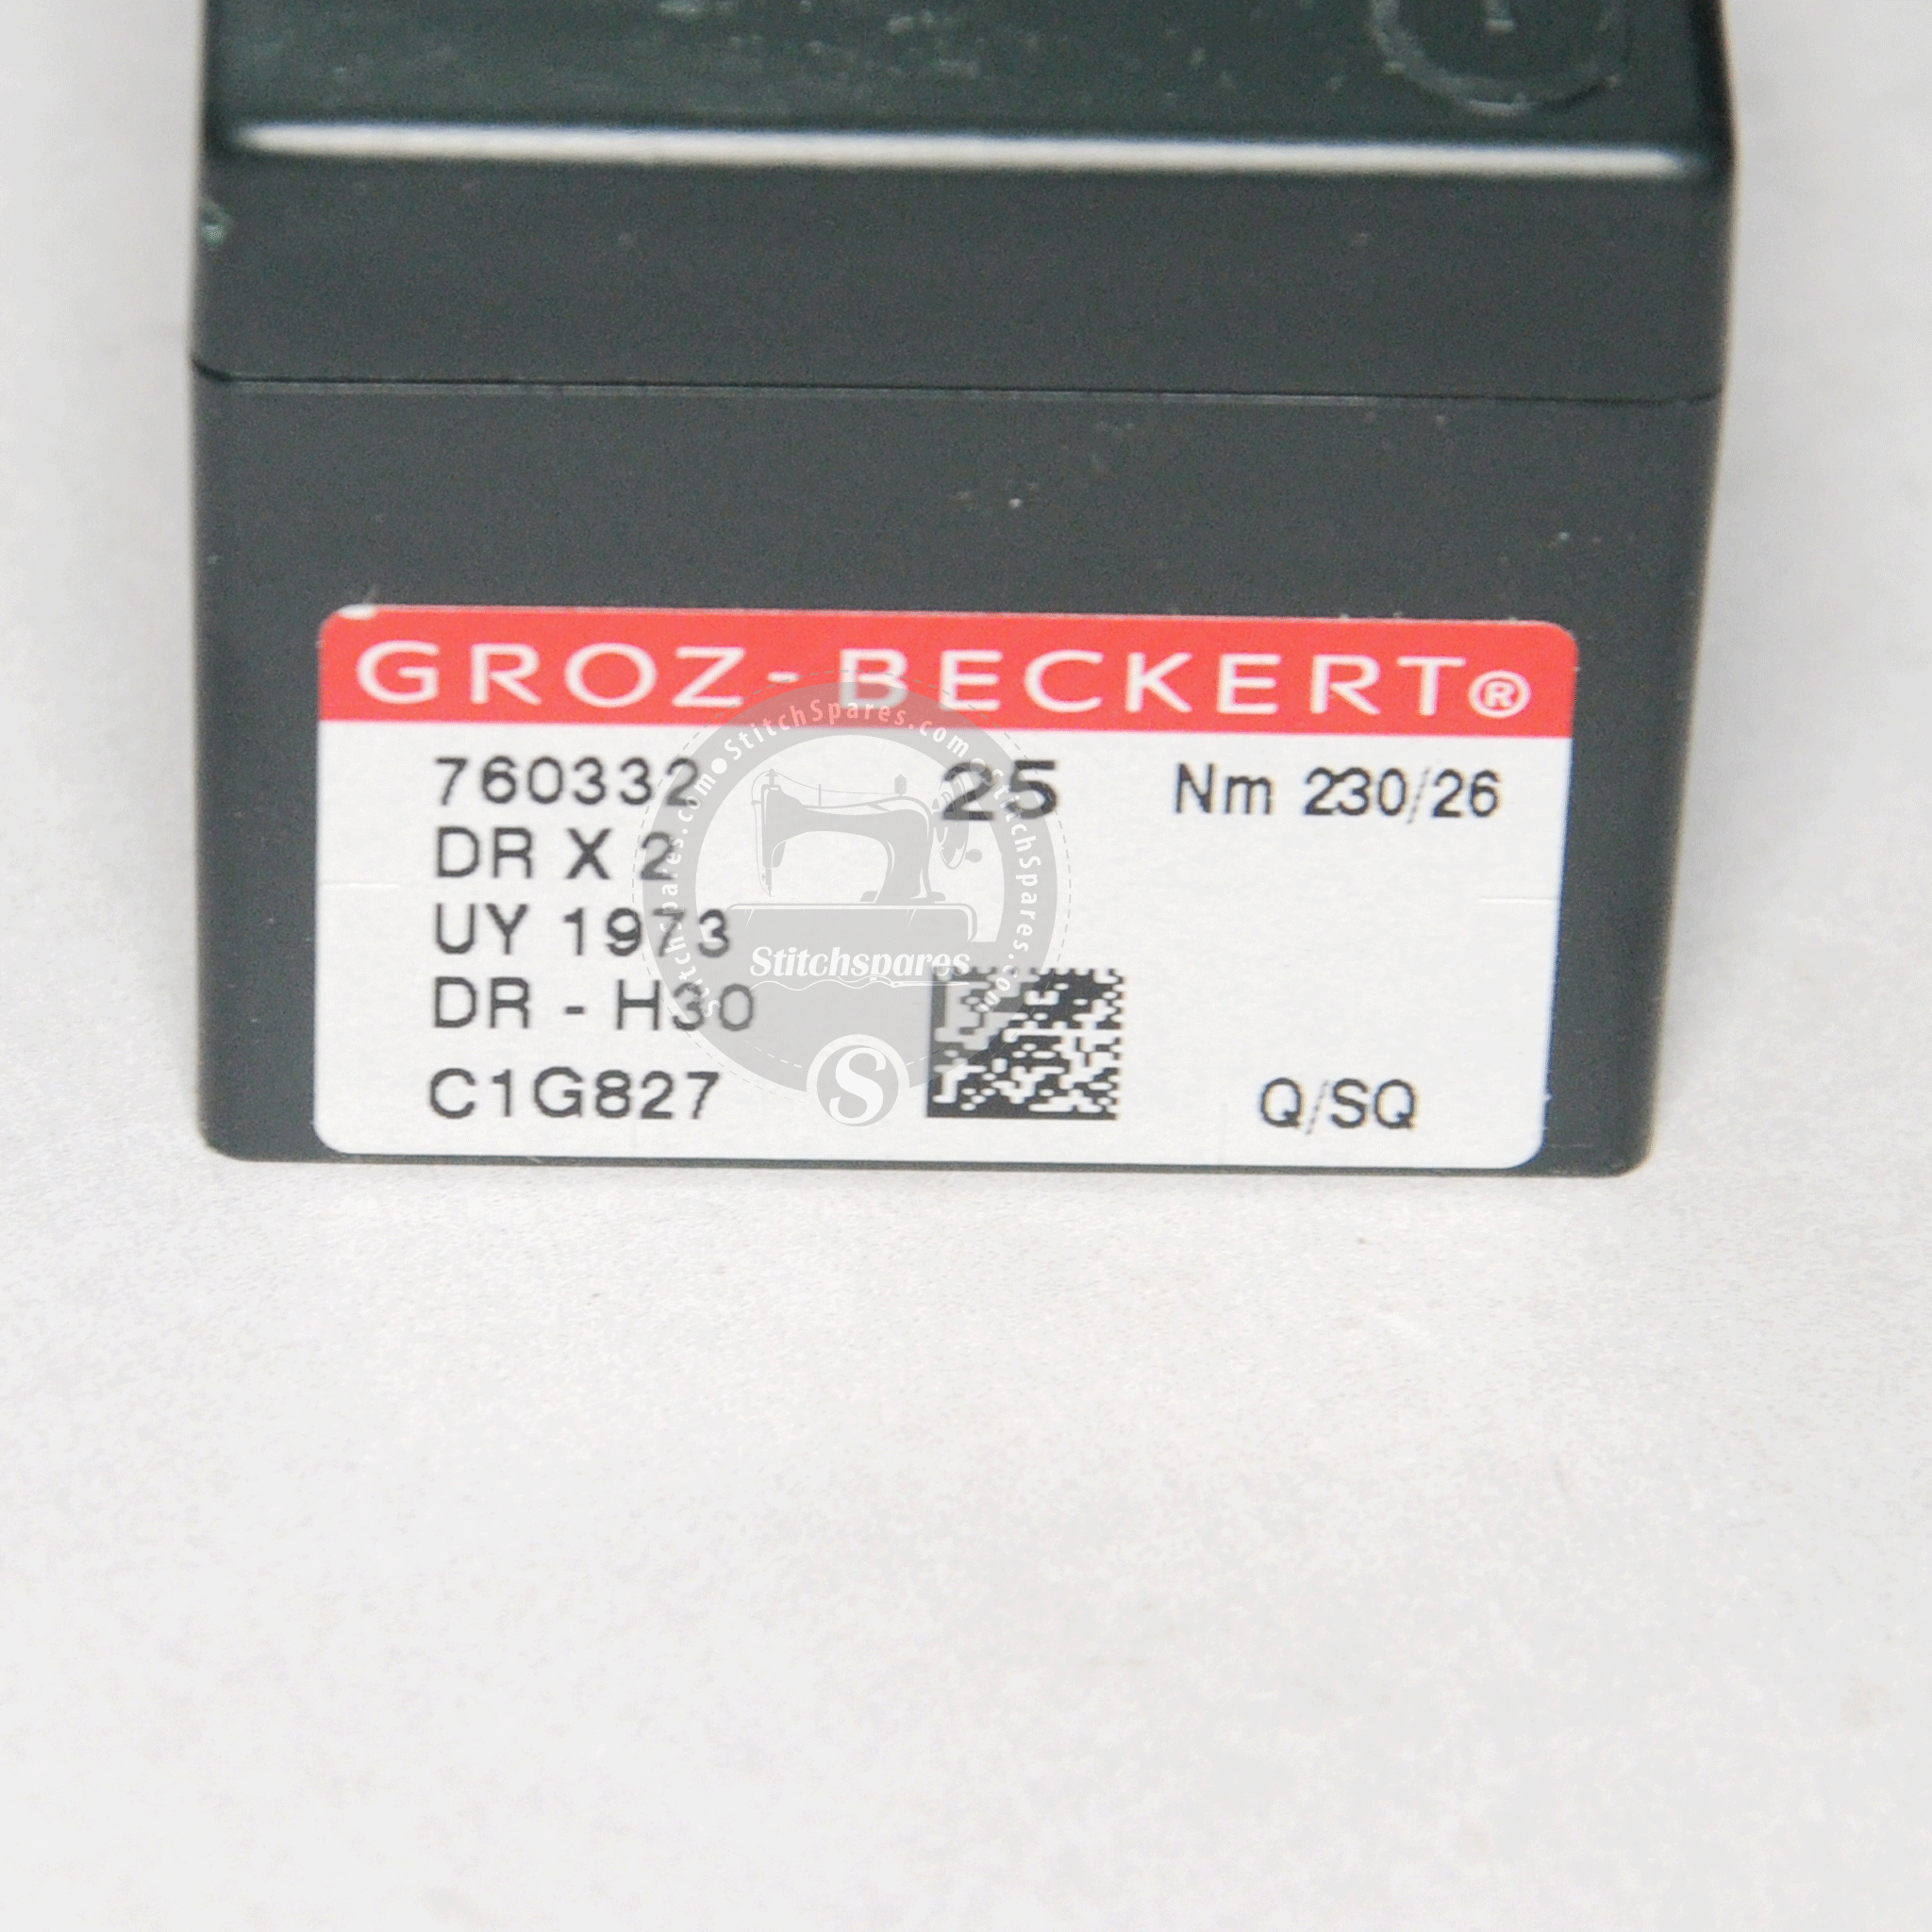 DRX2 124X2 UY 1973 23026 Aguja para máquina de coser Groz Beckert